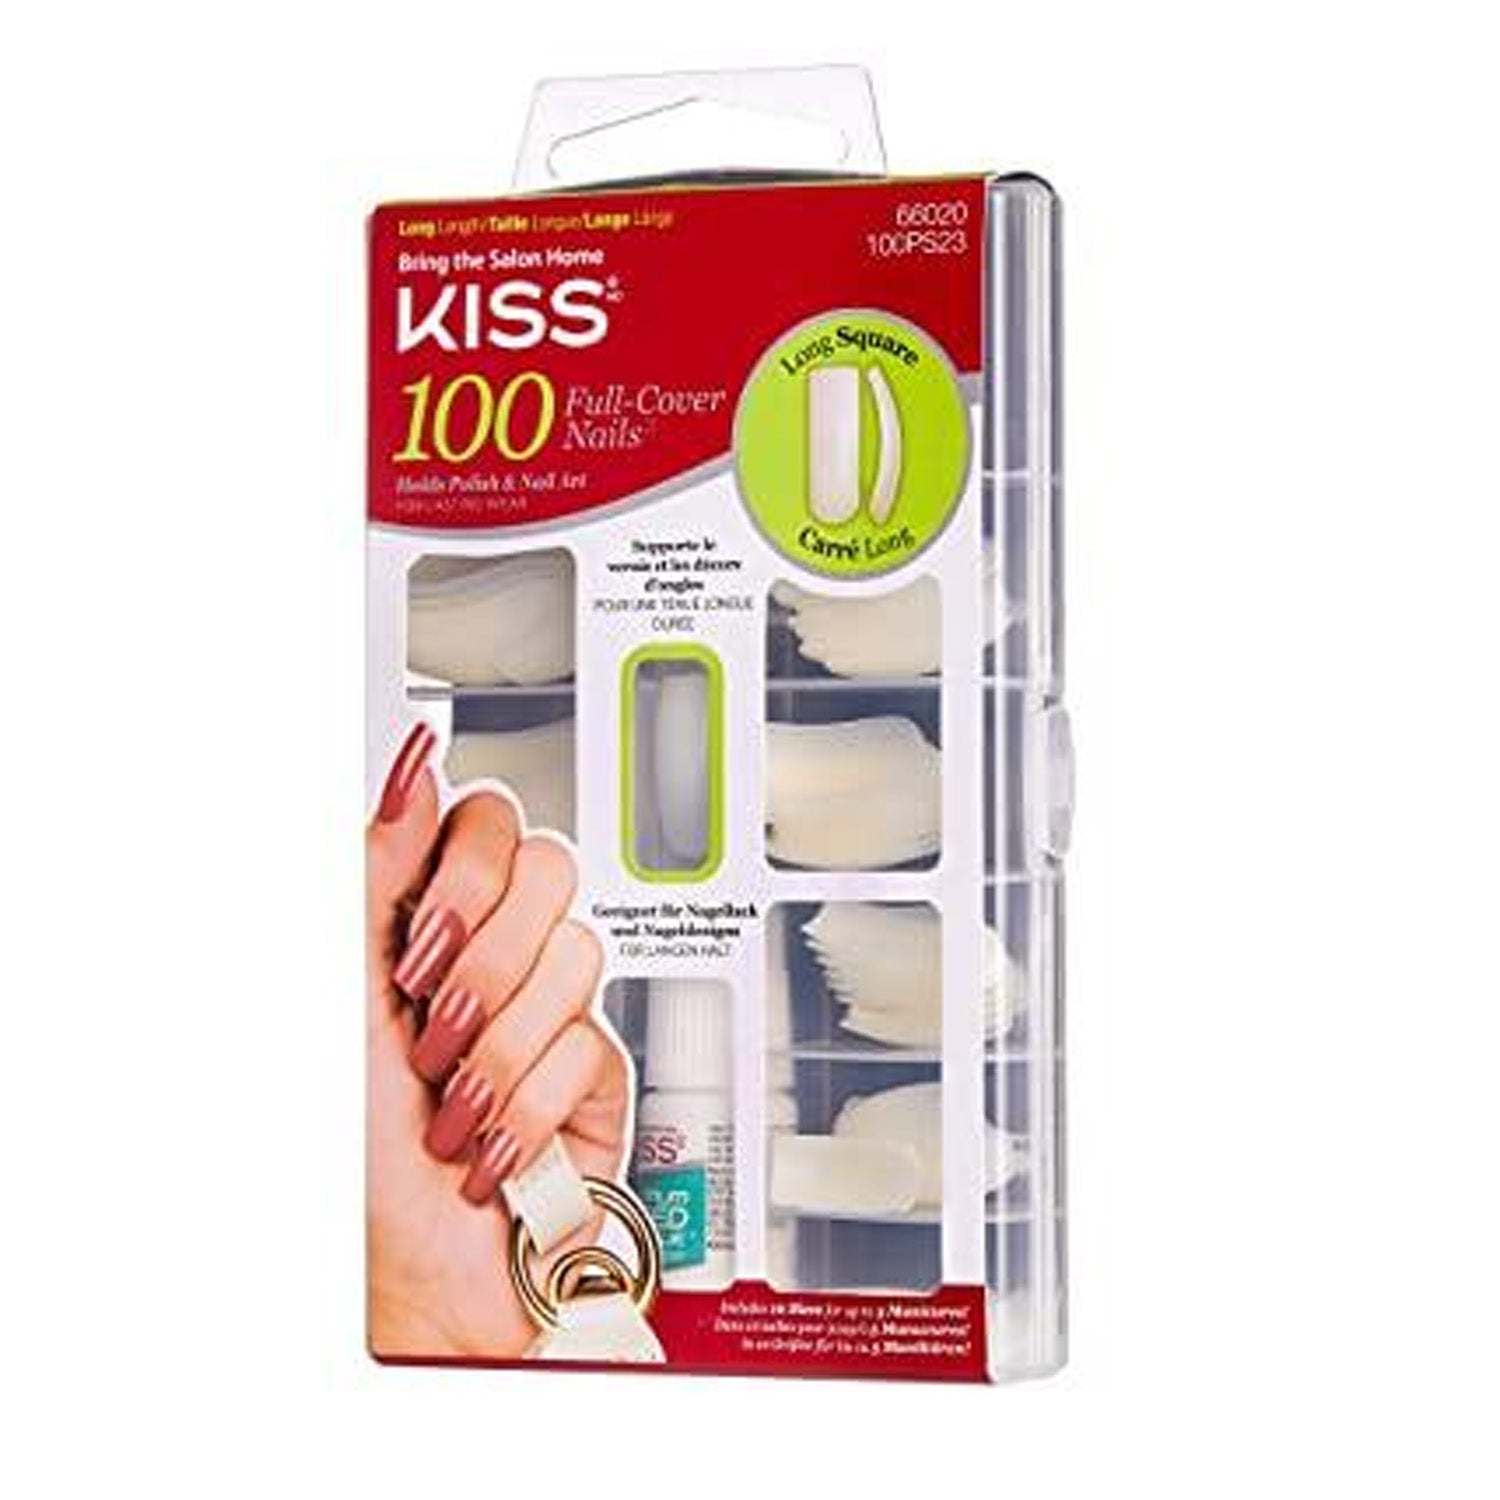 KISS 100 FULL-COVER NAILS LONG SQUARE ##100PS23